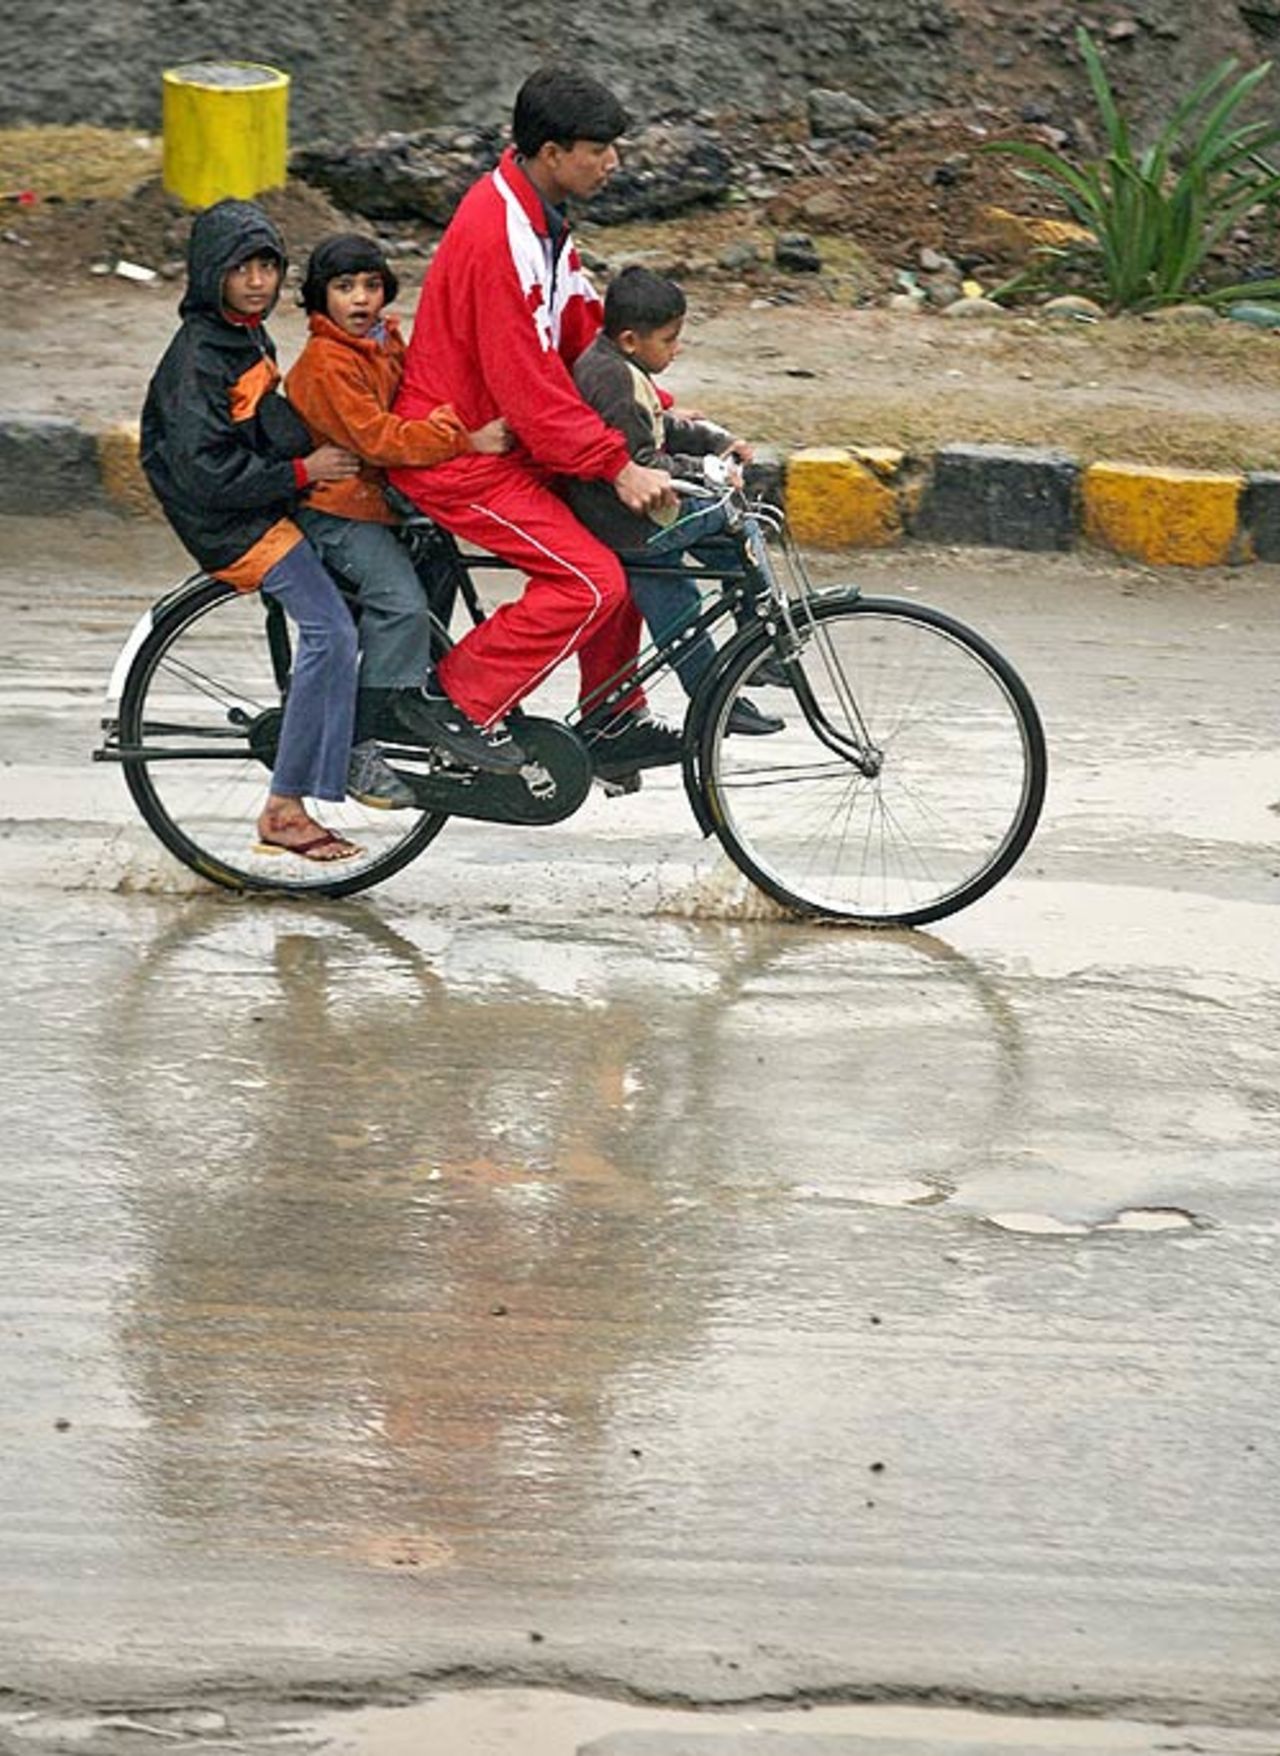 A man transports children across the rain-drenched roads, Rawalpindi, December 3, 2006